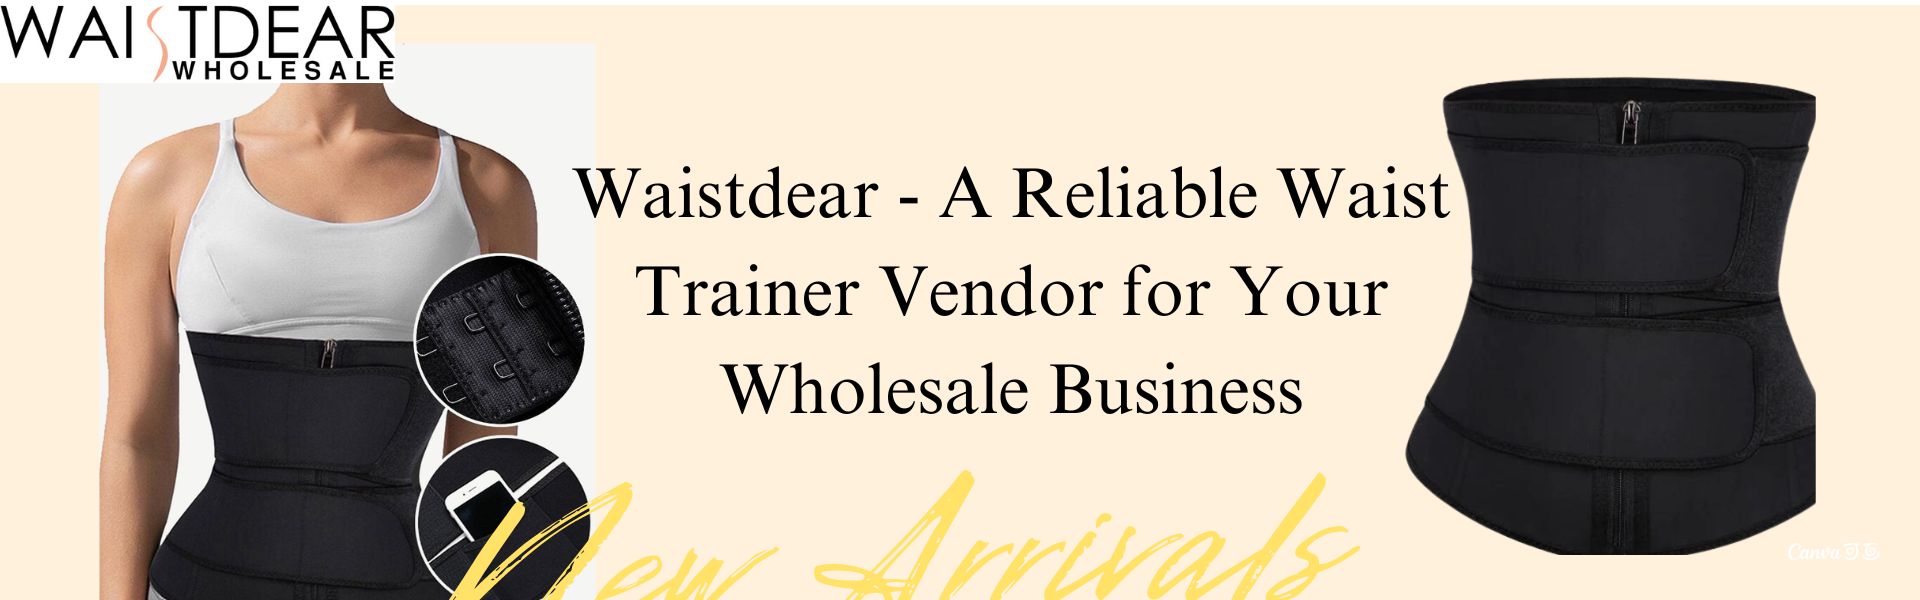 Waistdear - A Reliable Waist Trainer Vendor for Your Wholesale Business